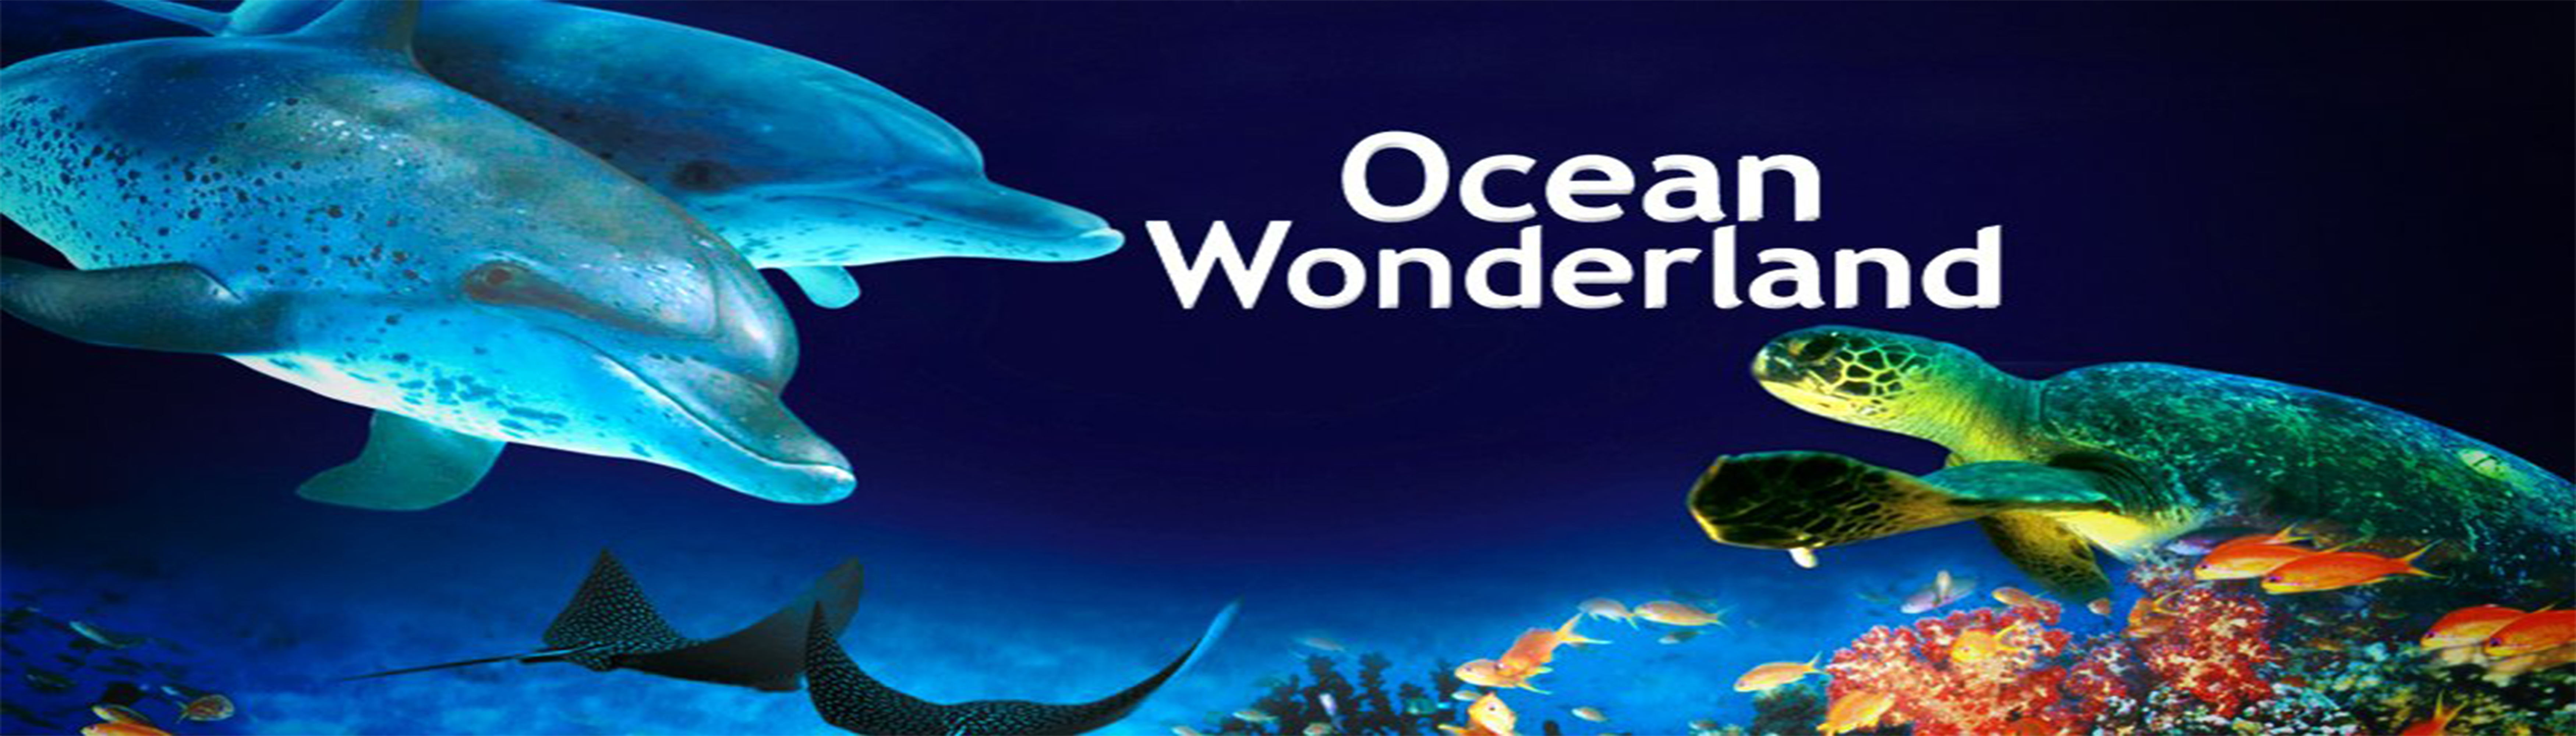 دانلود فیلم مستند Ocean Wonderland 2003